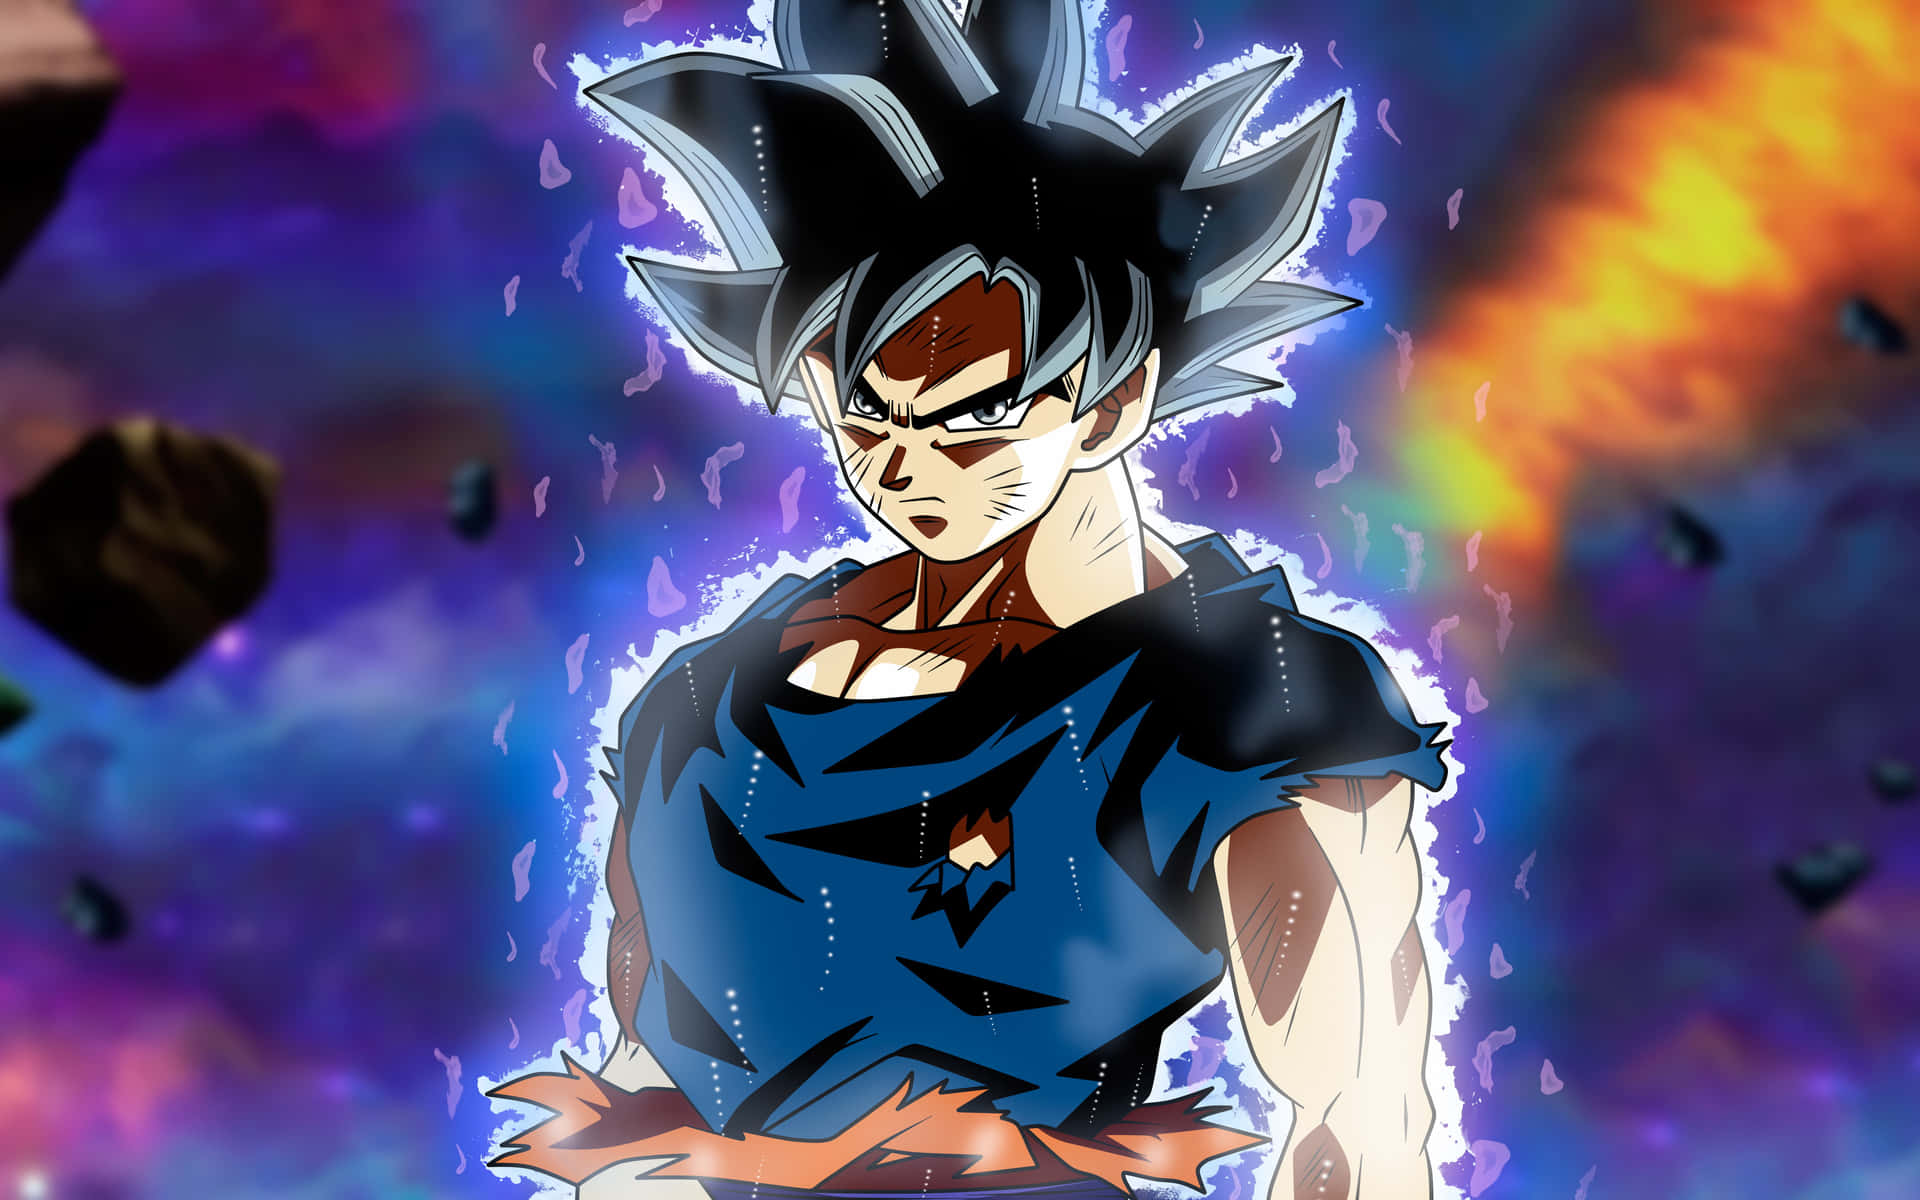 Goku powers up to Super Saiyan Blue